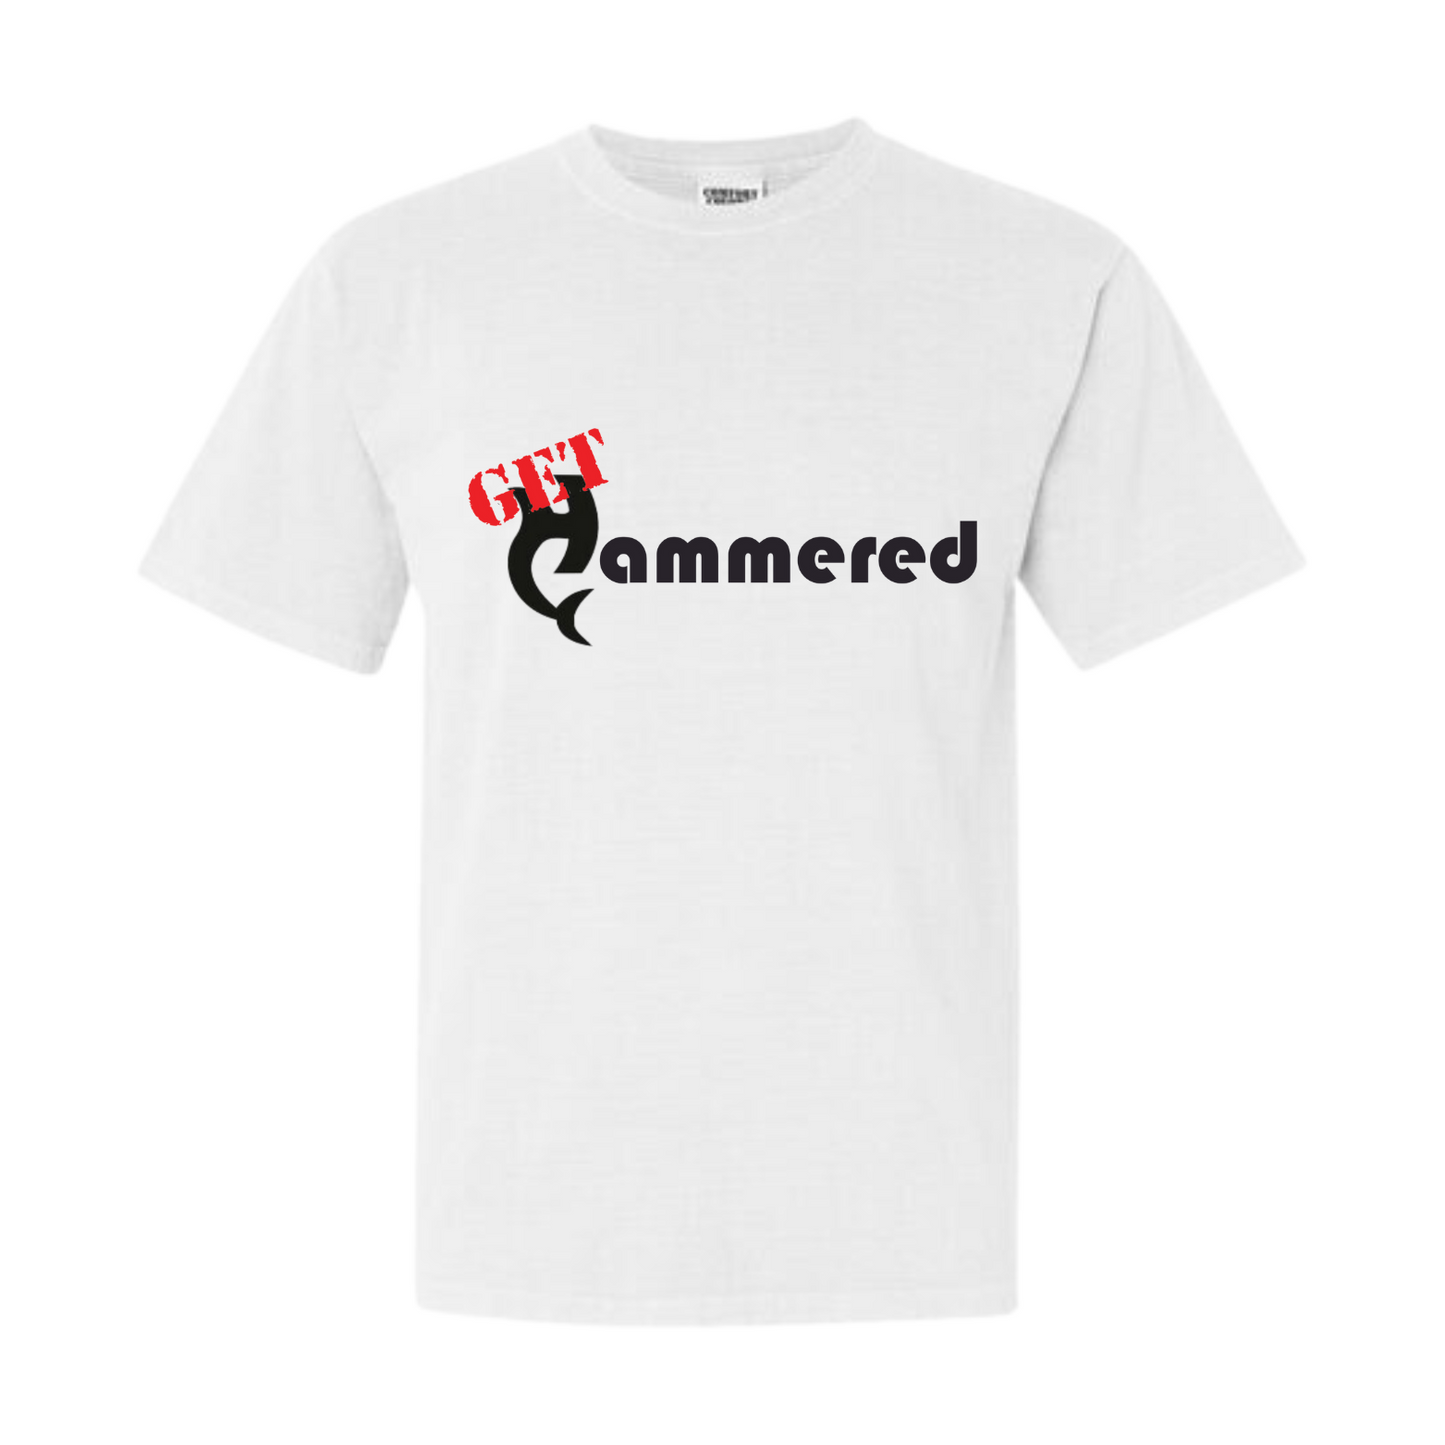 Get Hammered T-Shirt, White